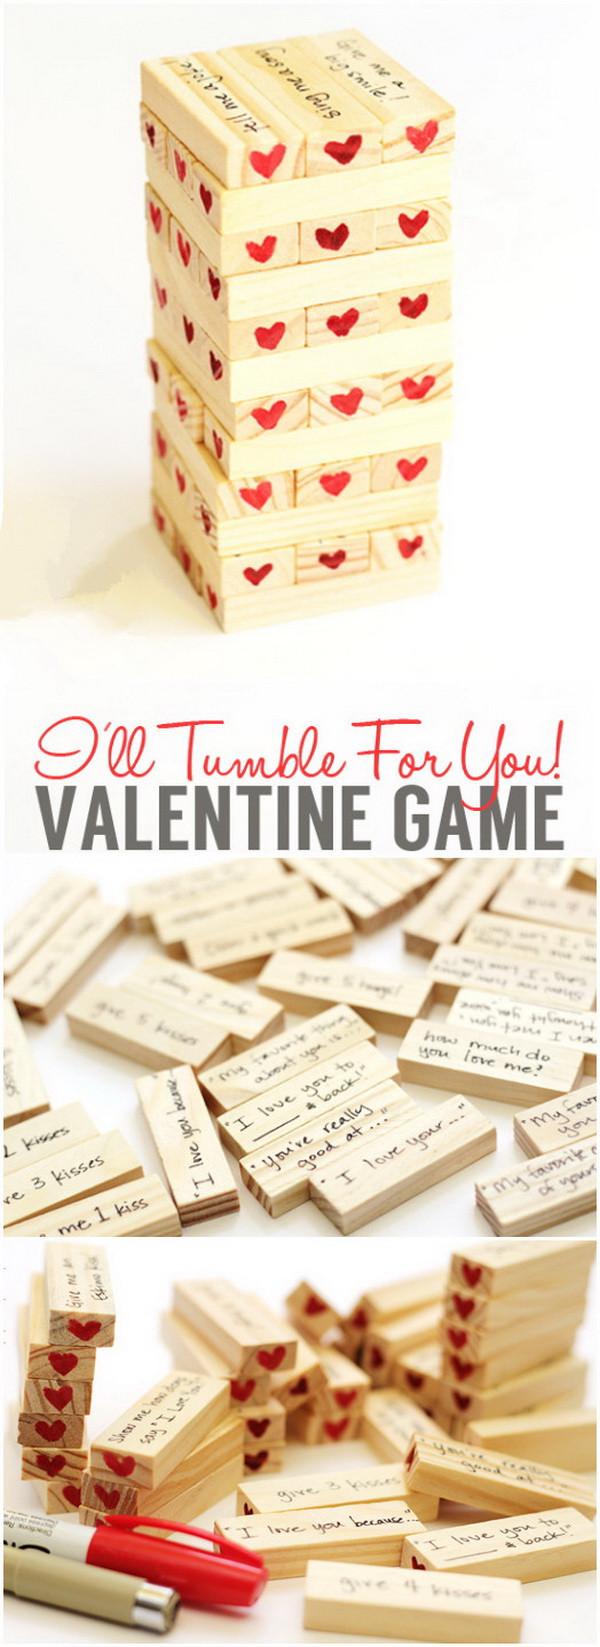 Cute Valentines Gift Ideas For Boyfriend
 Easy DIY Valentine s Day Gifts for Boyfriend Listing More